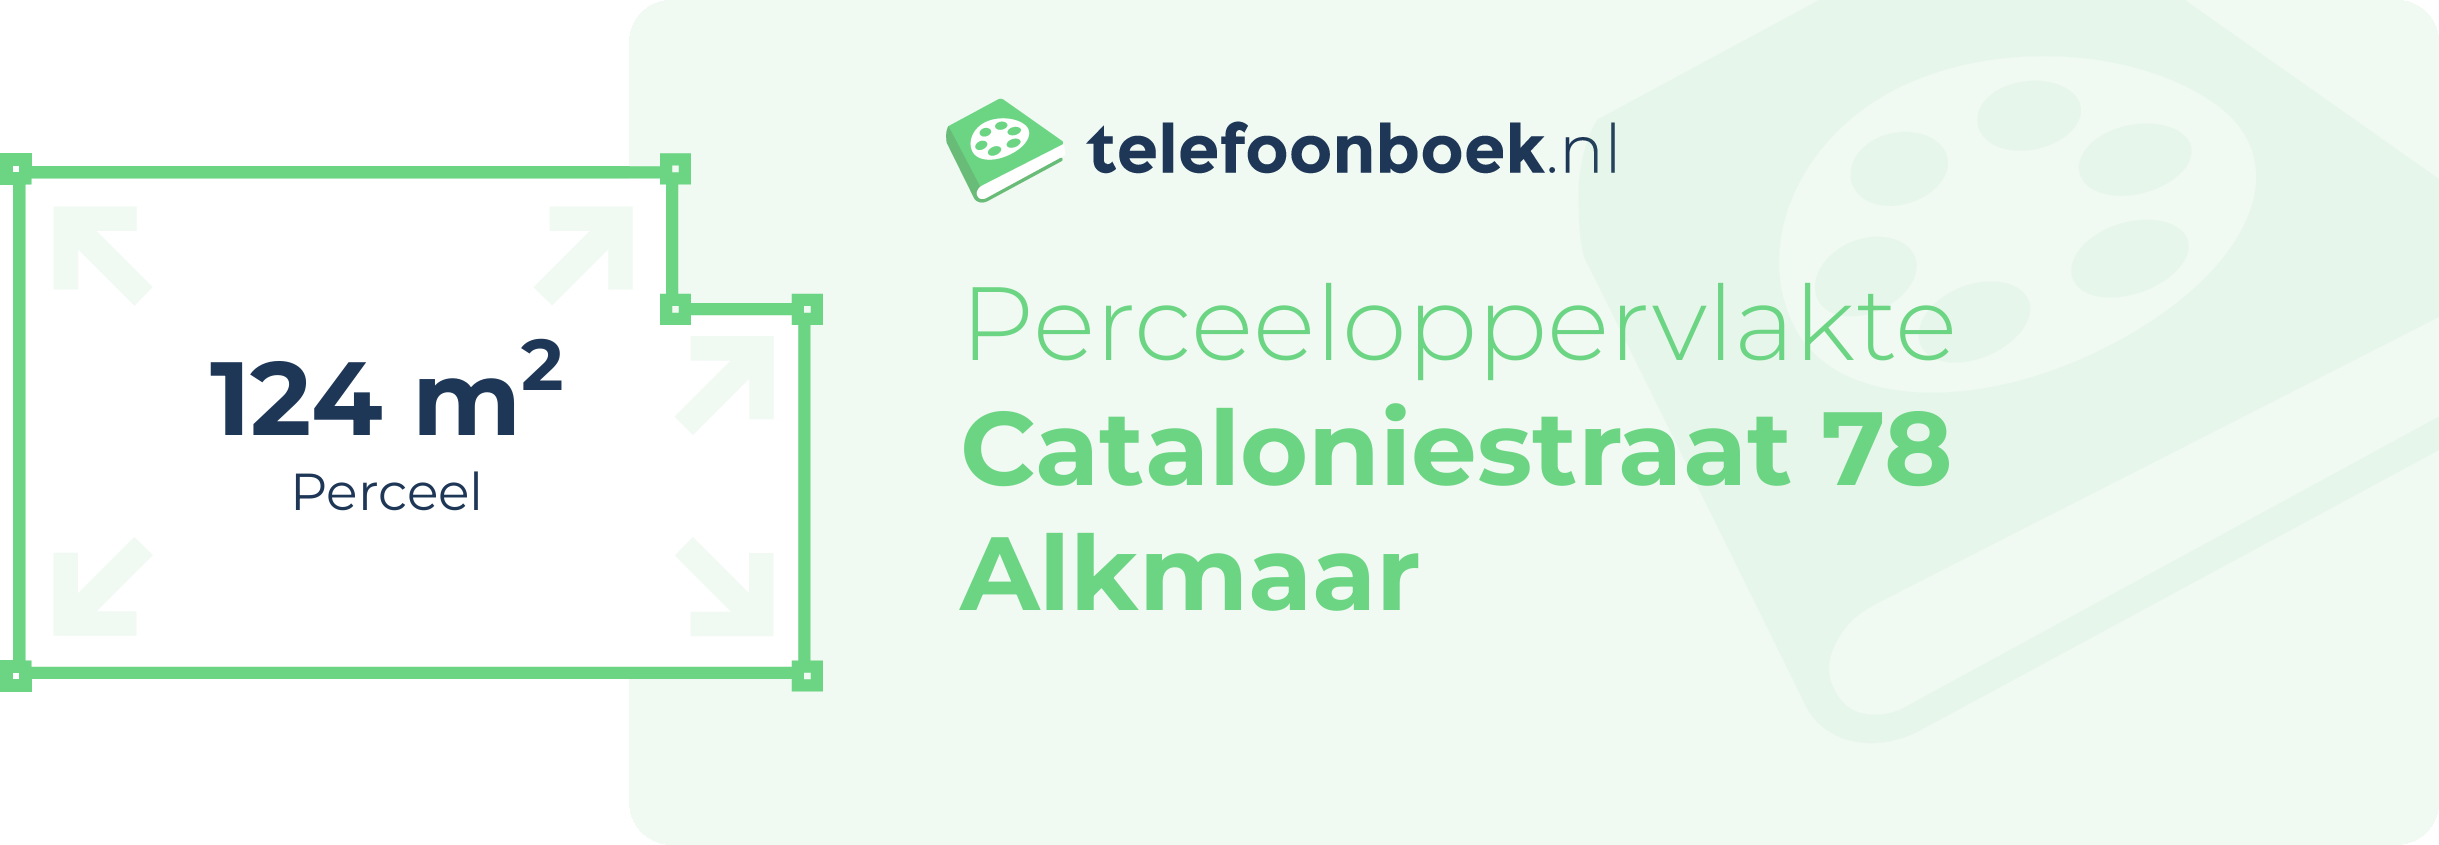 Perceeloppervlakte Cataloniestraat 78 Alkmaar